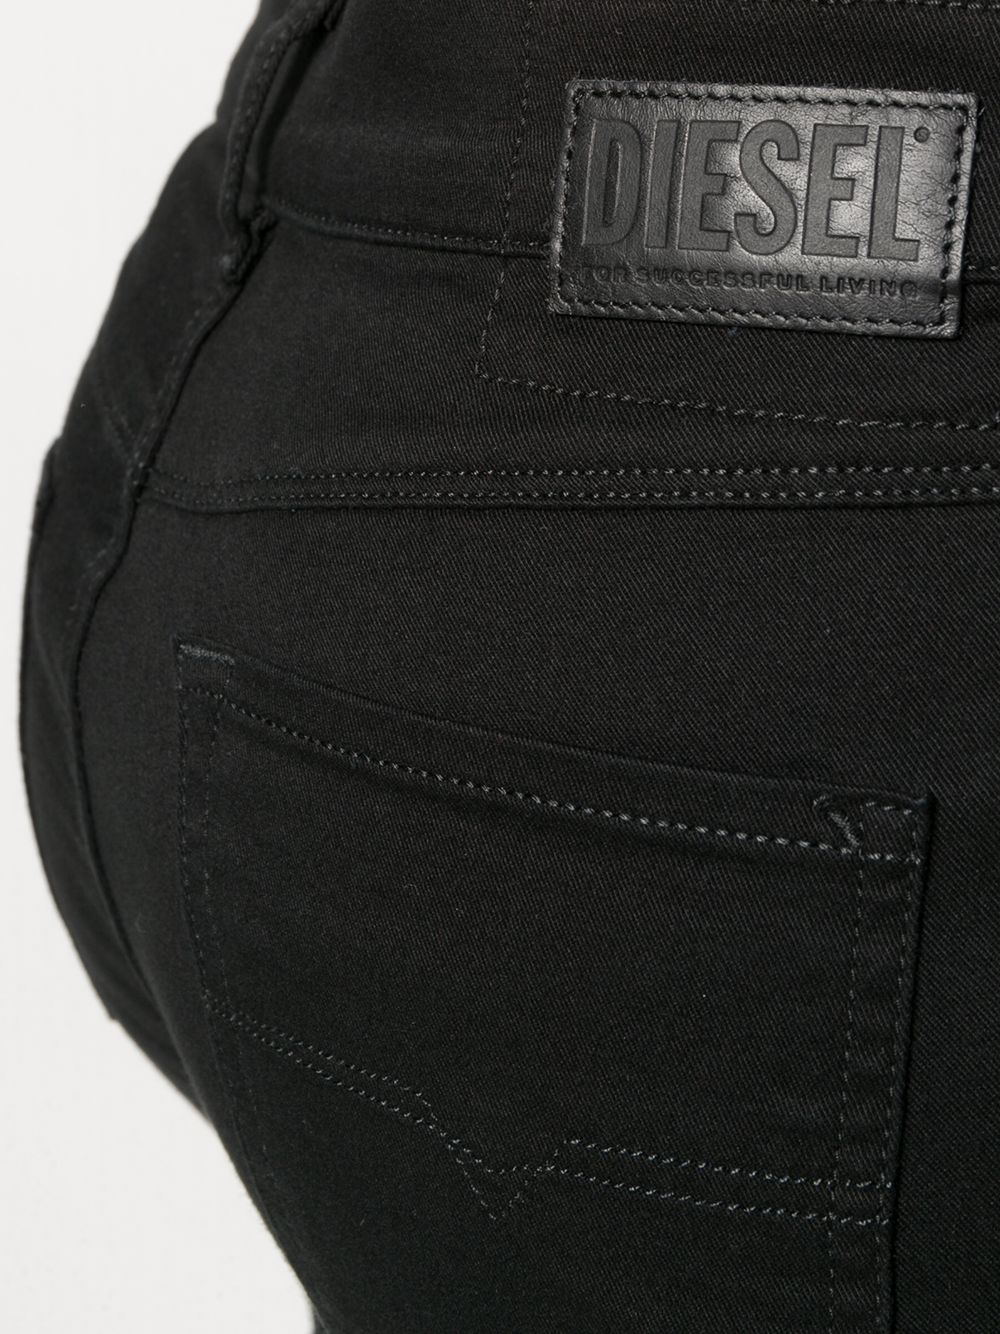 фото Diesel джинсы прямого кроя sandy